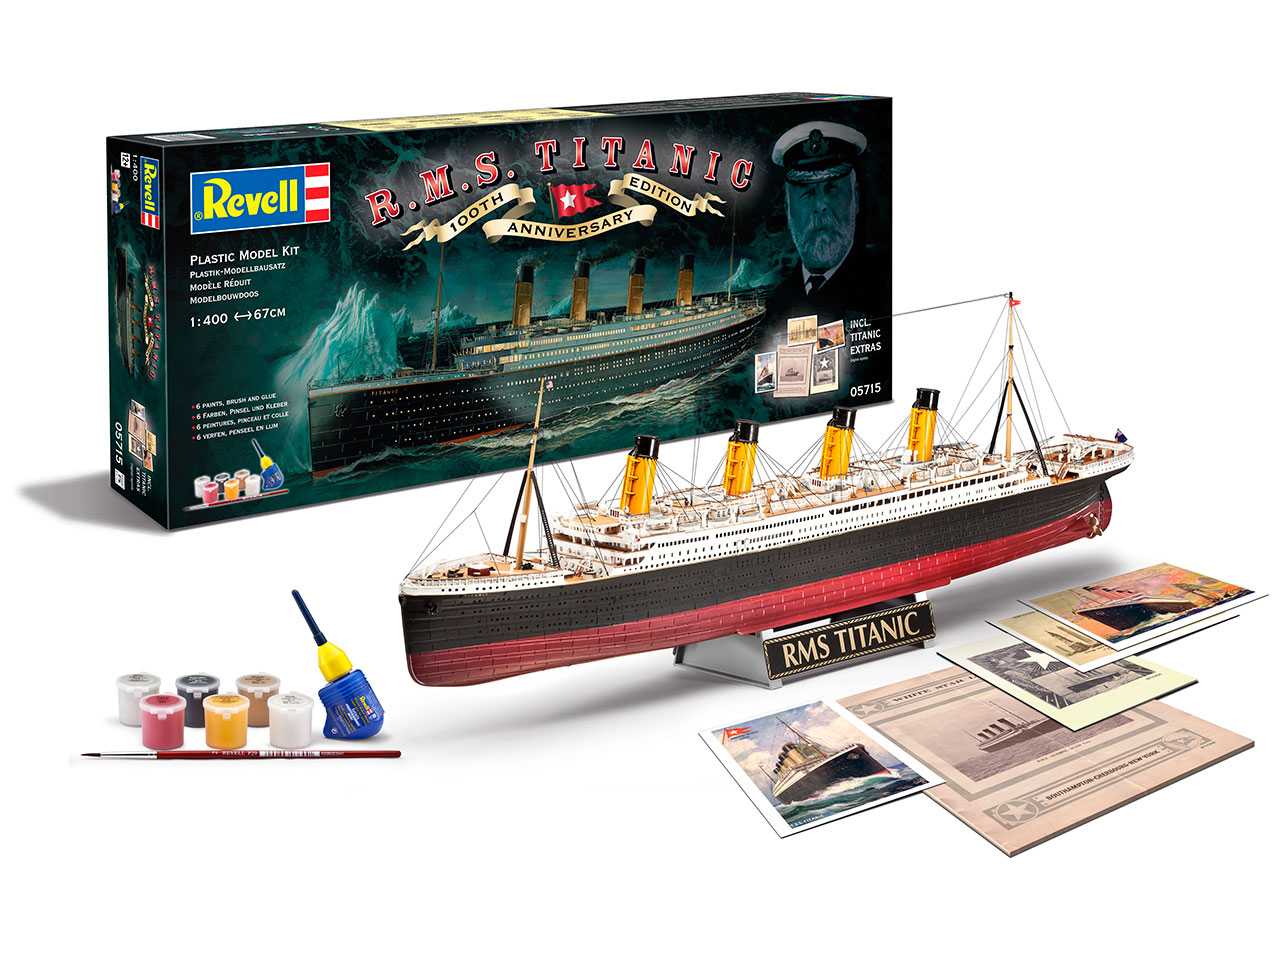 Fotografie Gift-Set 05715 - R.M.S. Titanic - 100th anniversary edition (1:400)